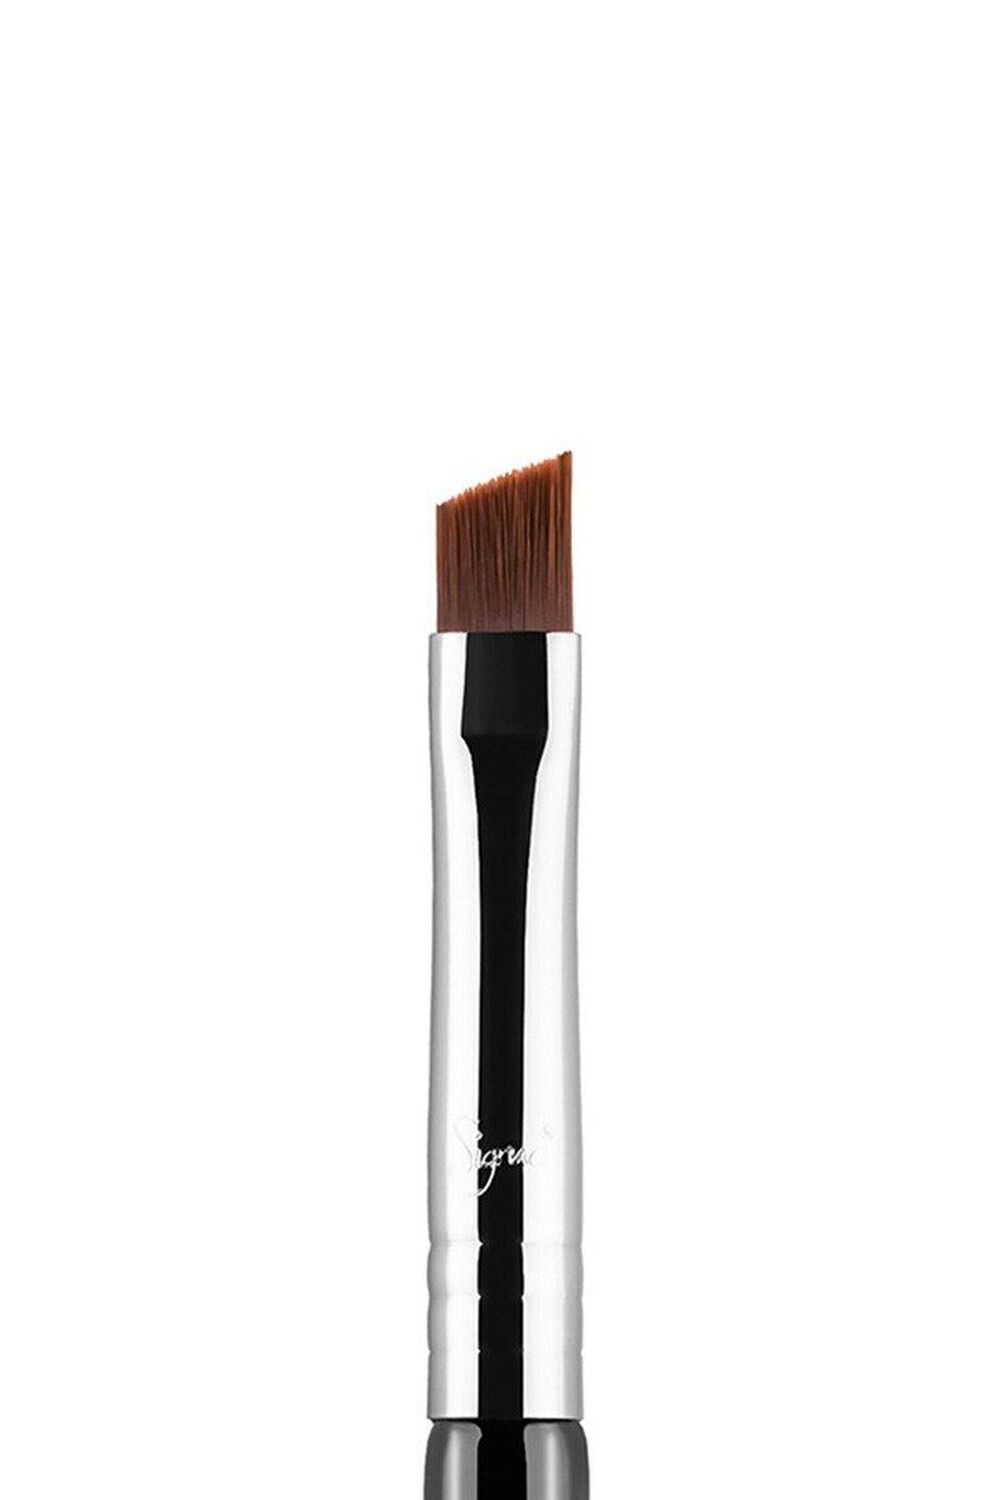 Sigma Beauty E65 – Small Angle Brush